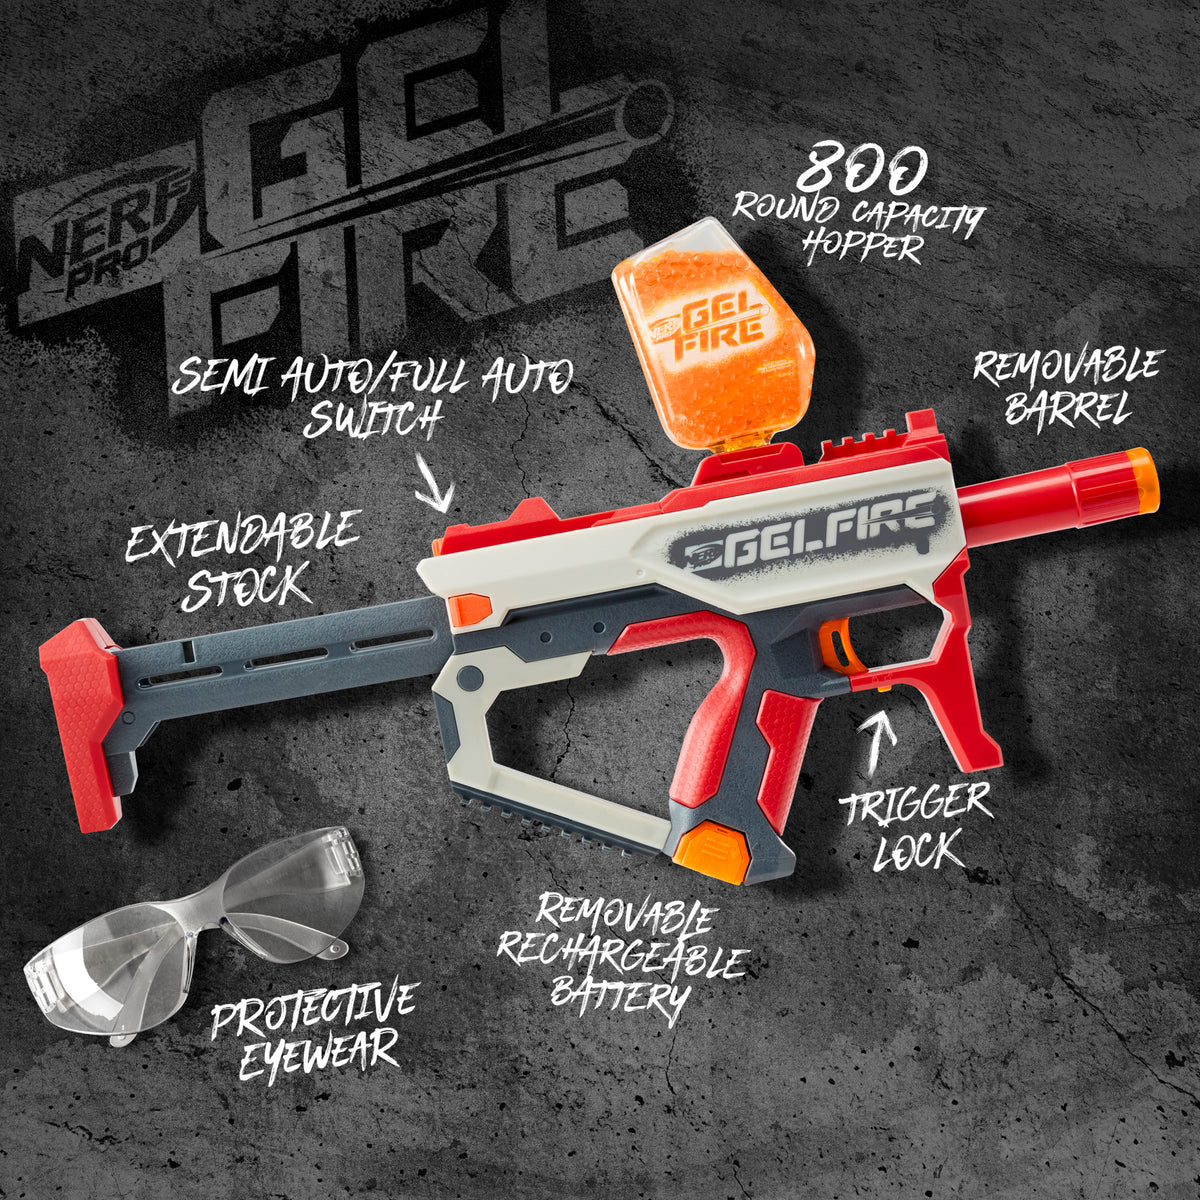 Nerf Pro Gelfire Dual Wield Pack – Hasbro Pulse